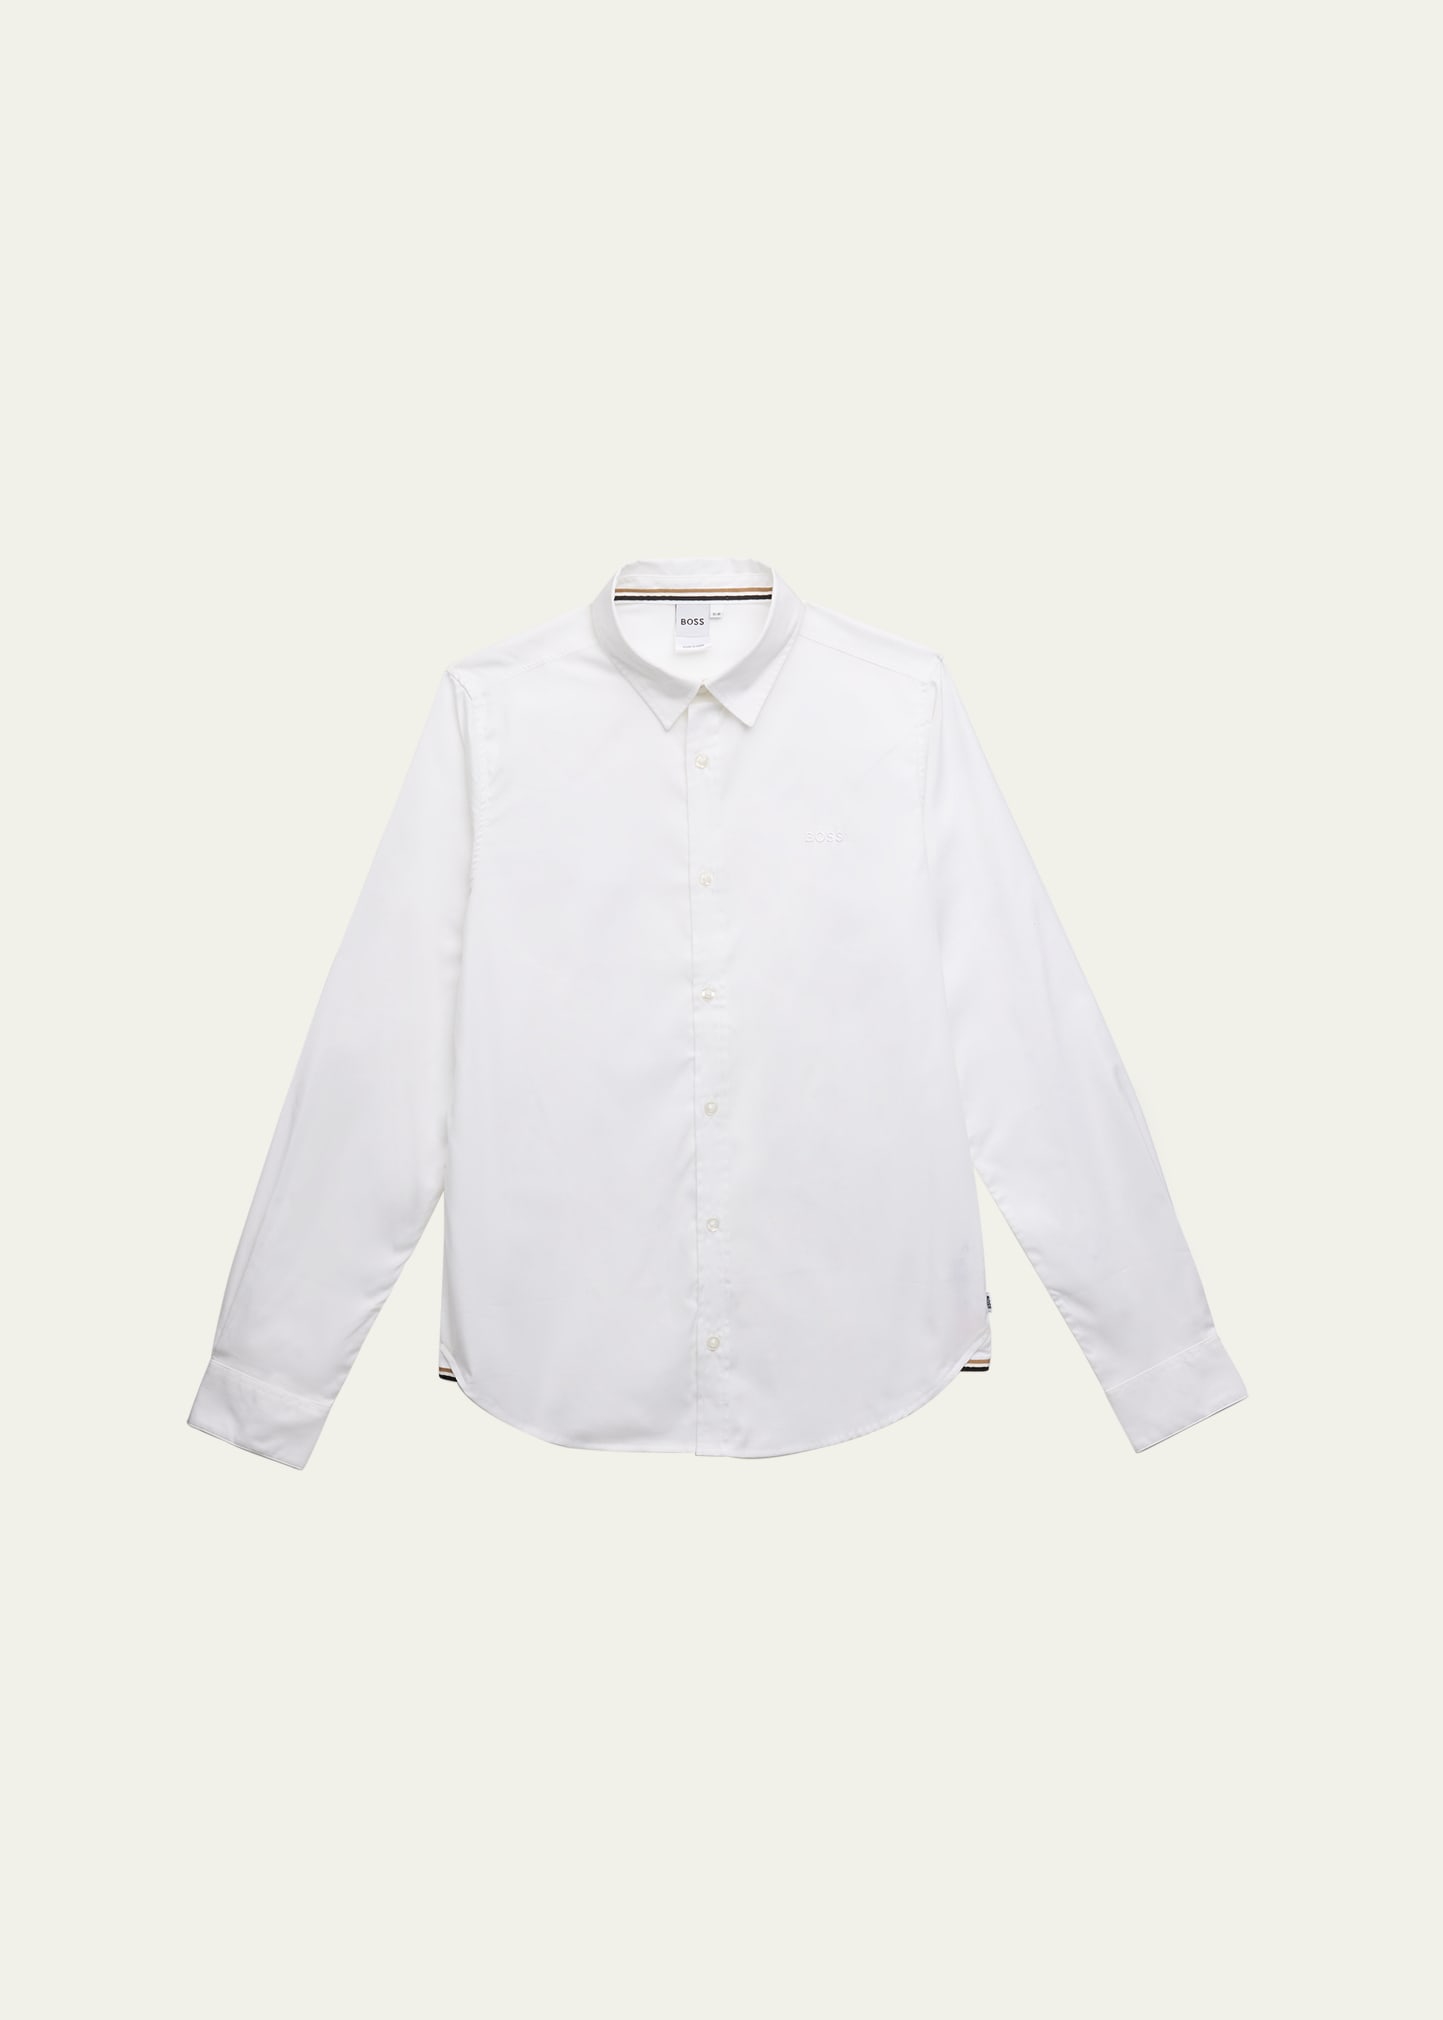 Boy's Long-Sleeve Cotton Oxford Shirt, Size 4-16